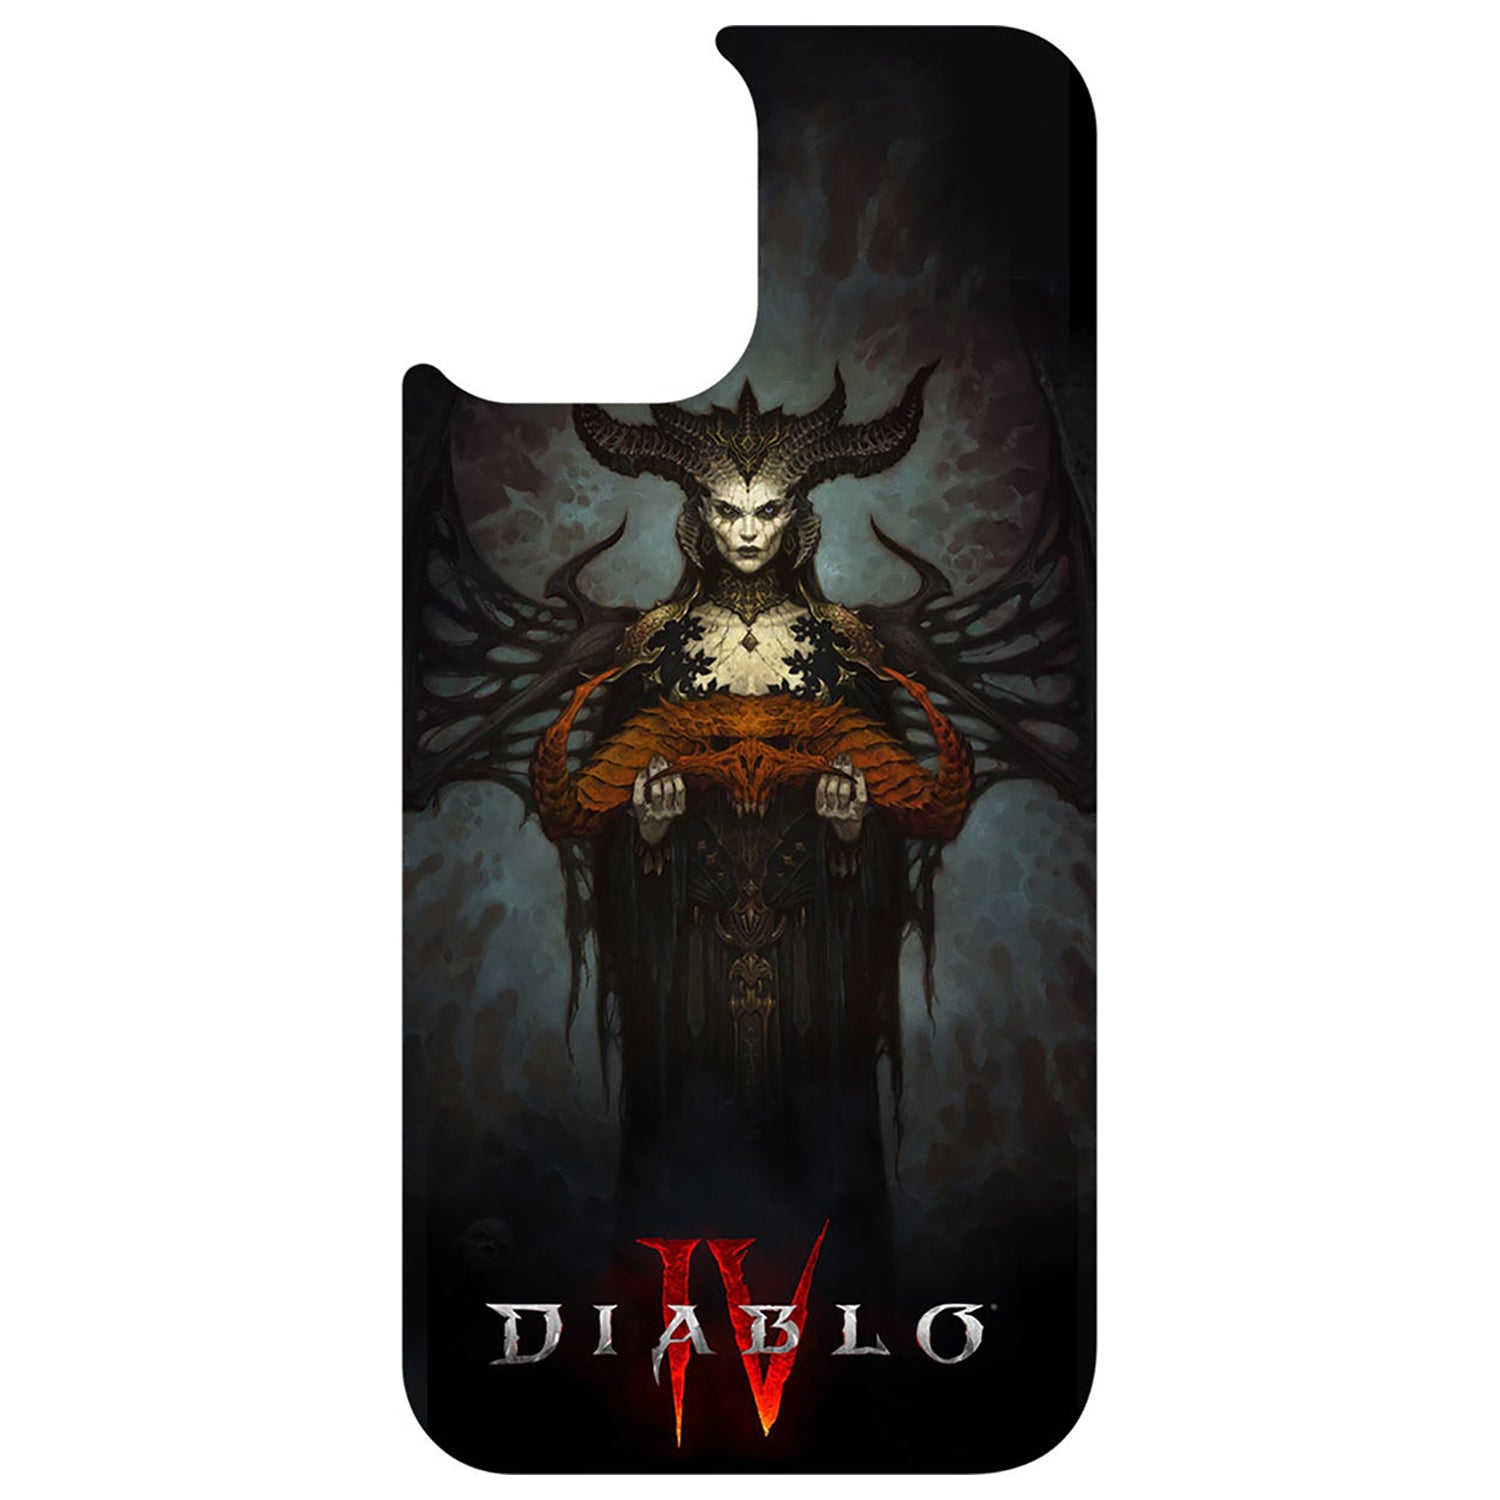 Diablo IV InfiniteSwap Phone Case Set - Lilith Swap